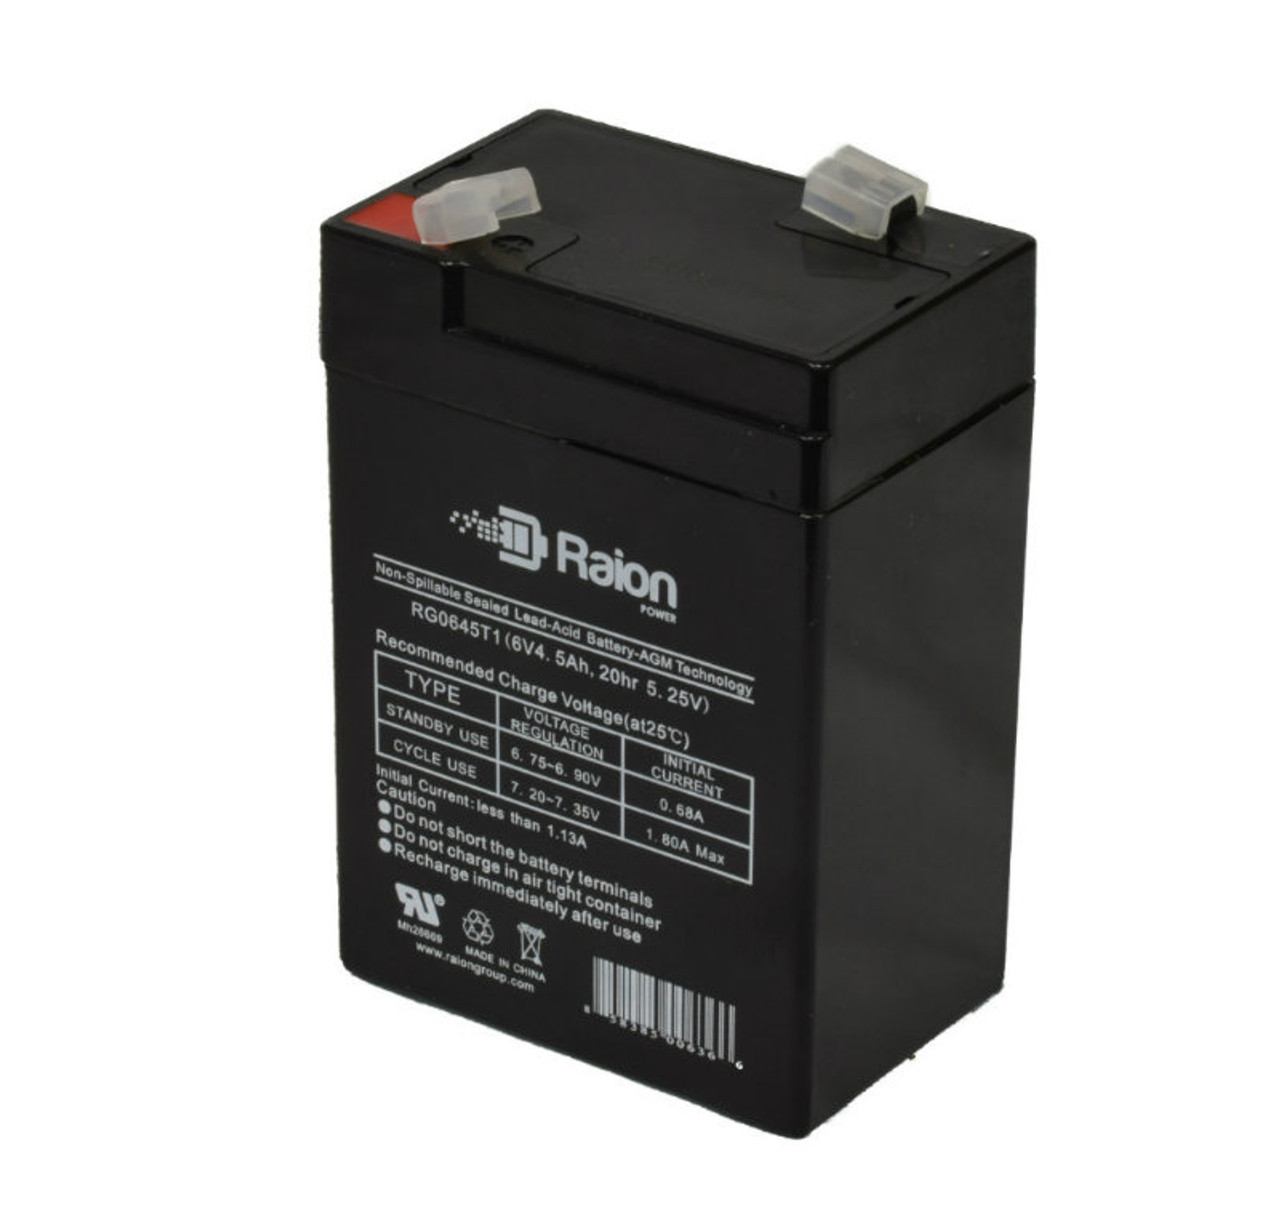 Raion Power RG0645T1 6V 4.5Ah Replacement Battery Cartridge for Sonnenschein CR64.5